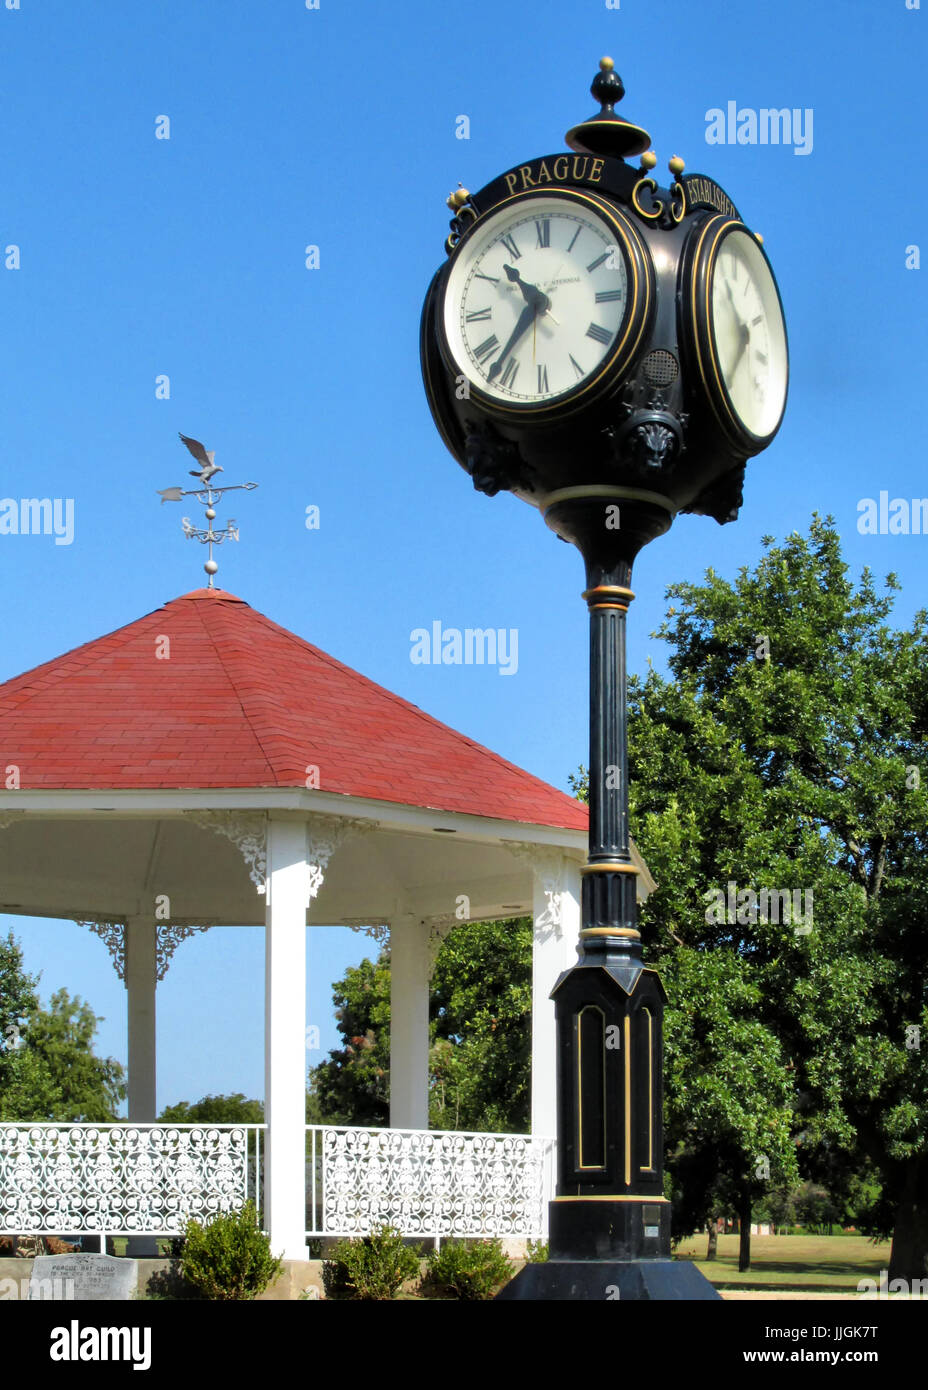 Praga Oklahoma parco centenario con orologio e gazebo Foto stock - Alamy